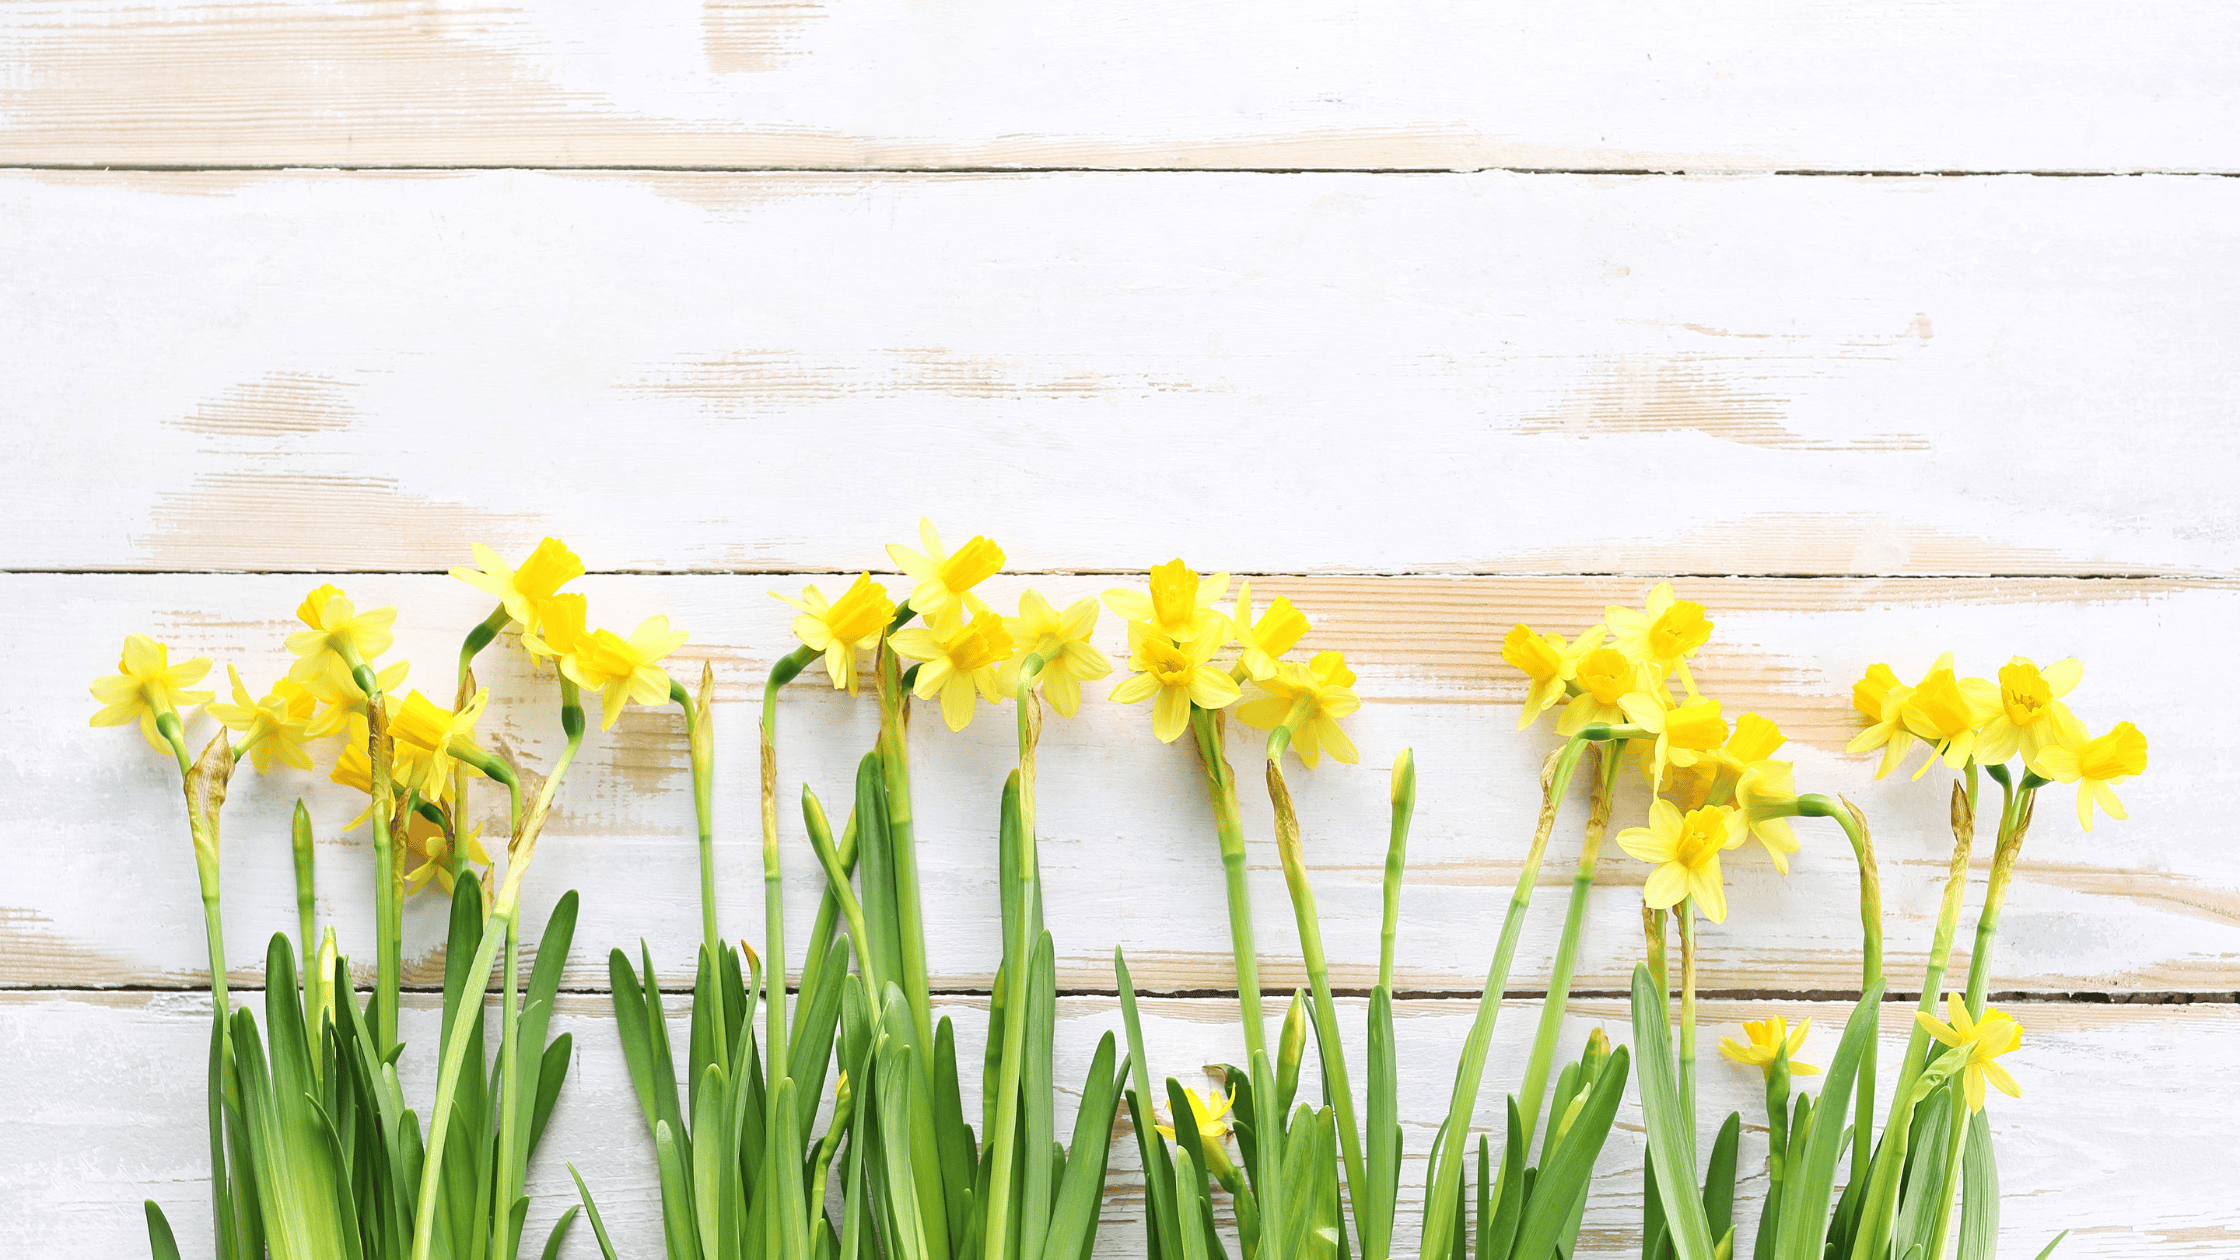 daffodils against a wood wall